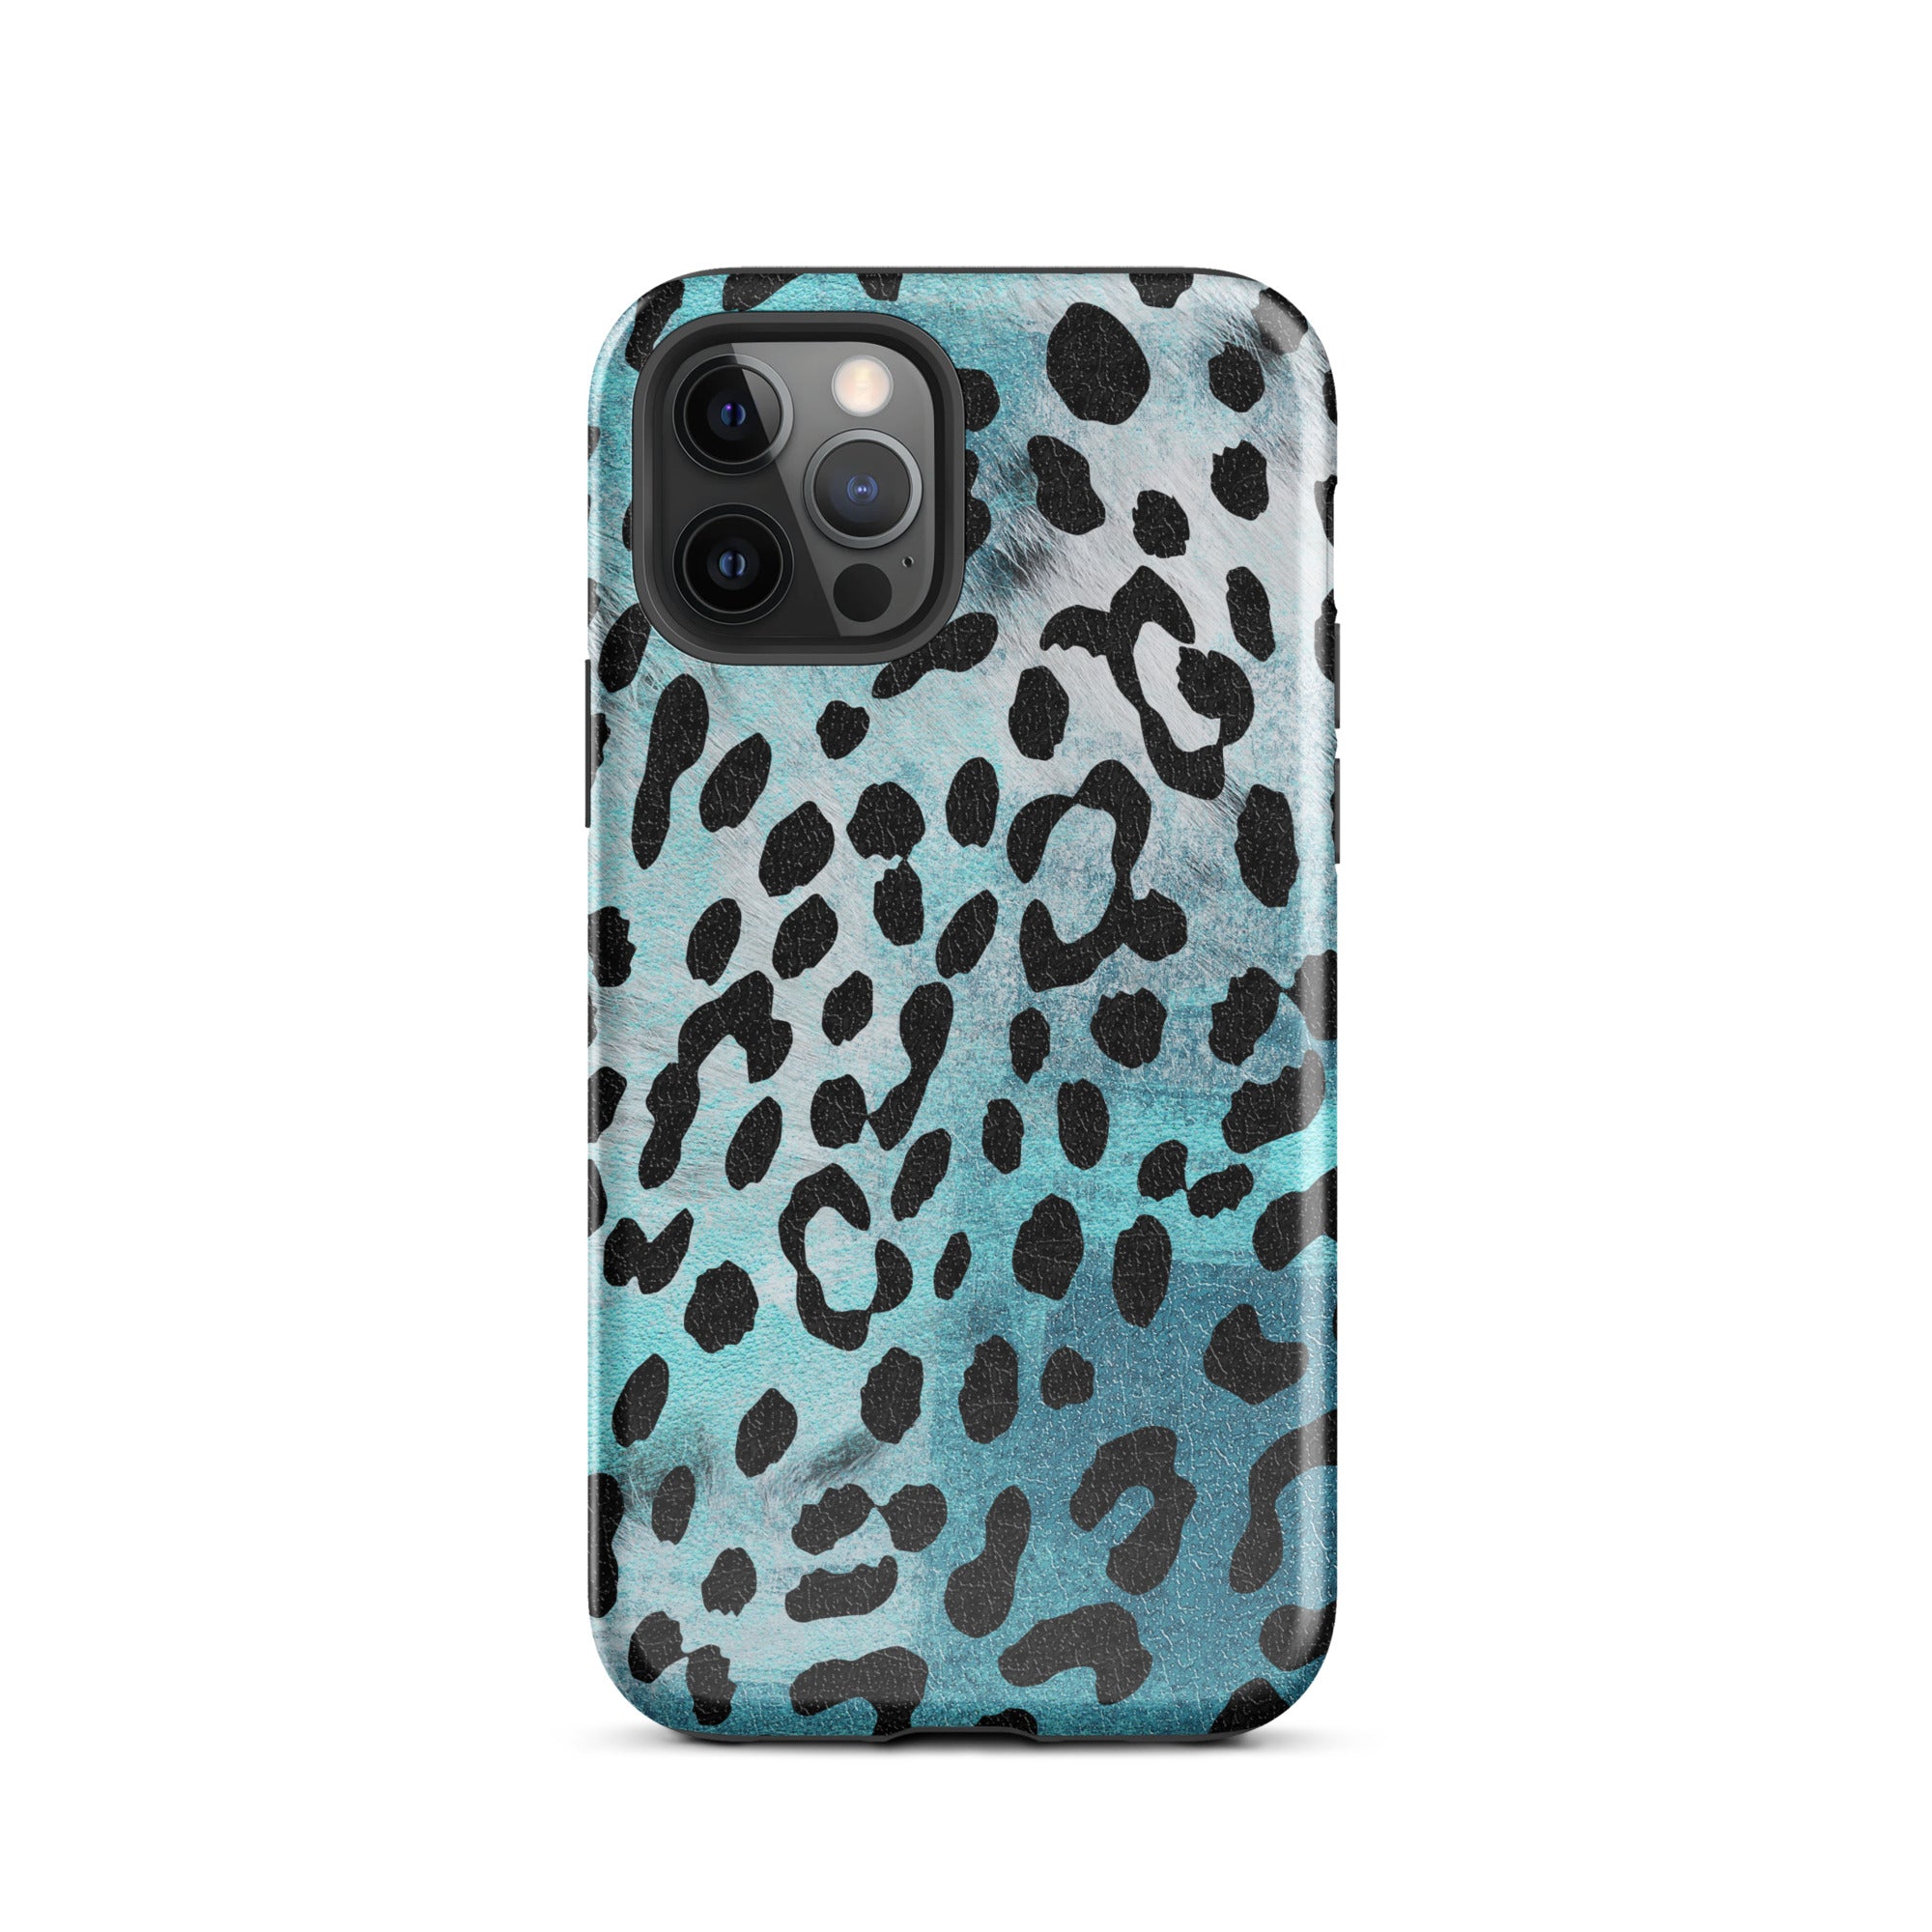 Tough Case for iPhone®- Safari Animal Print Design 02